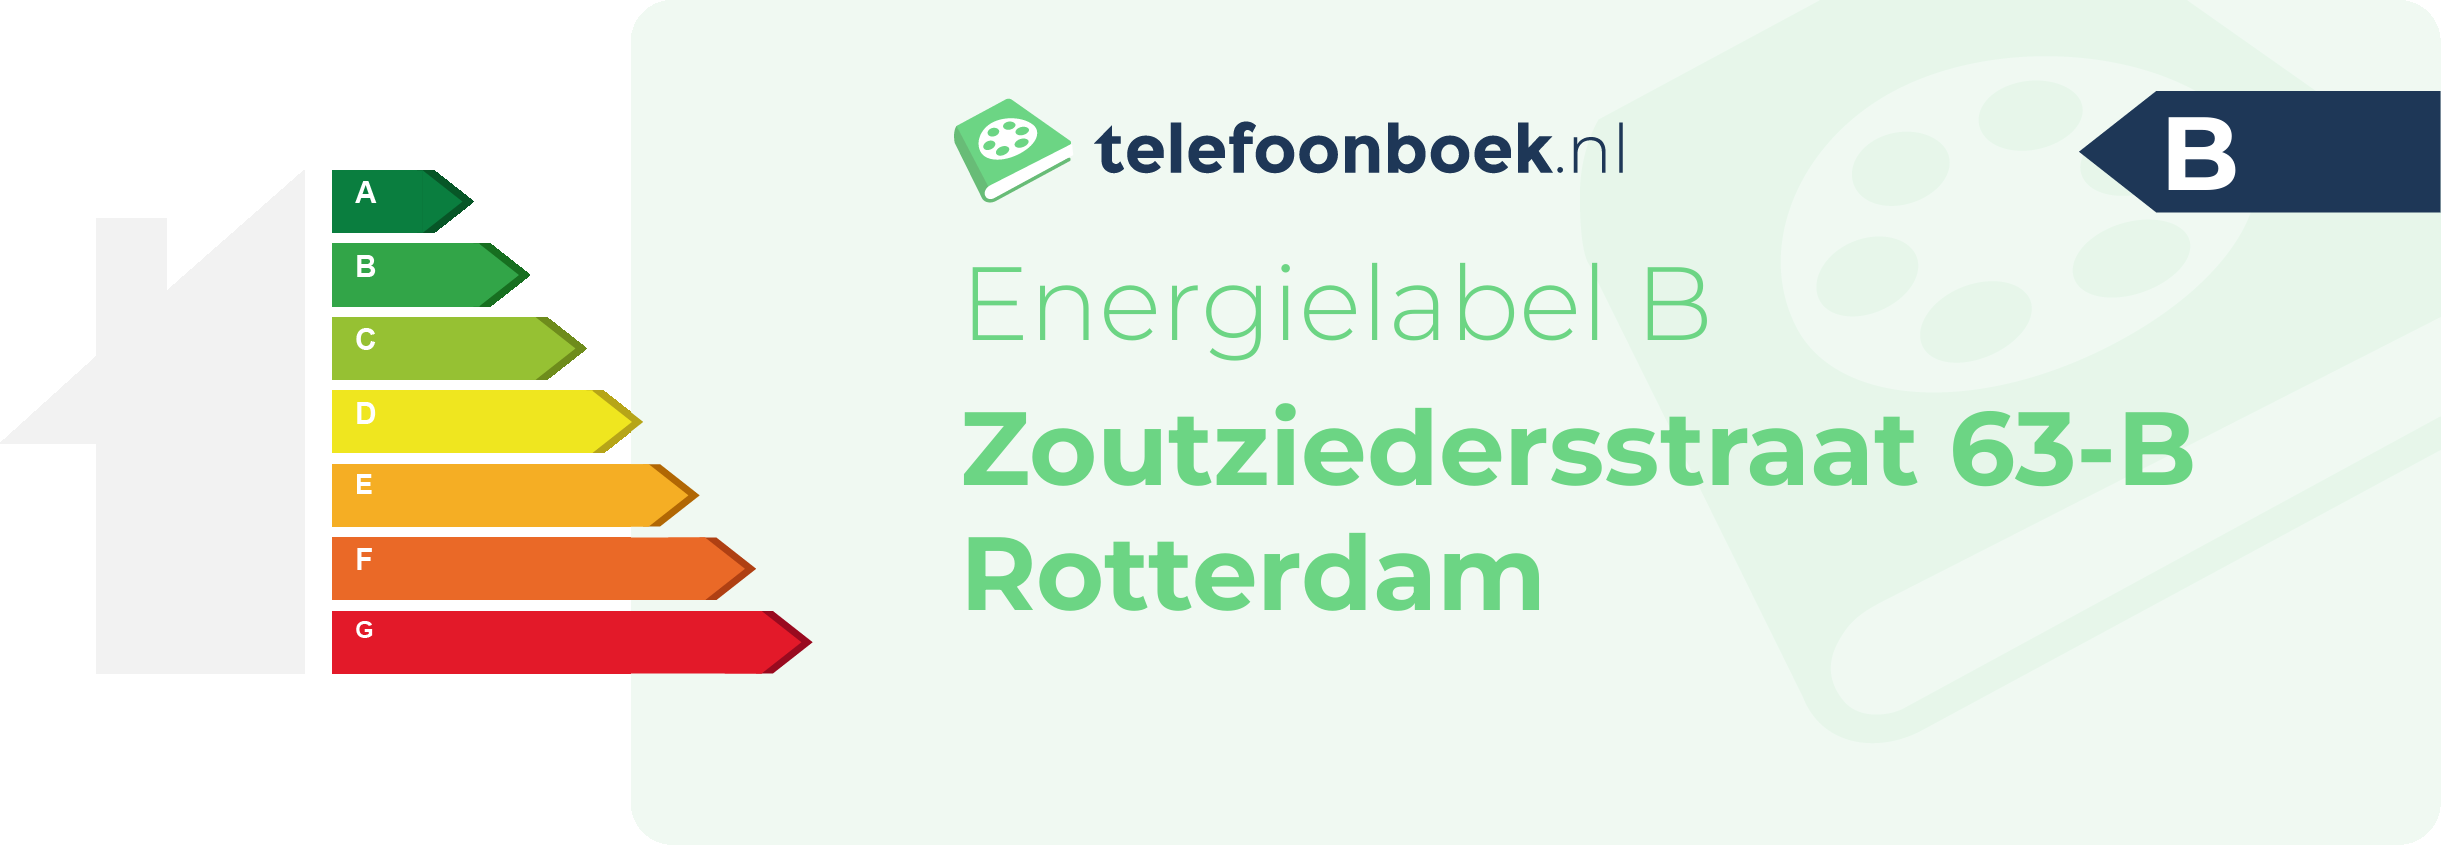 Energielabel Zoutziedersstraat 63-B Rotterdam